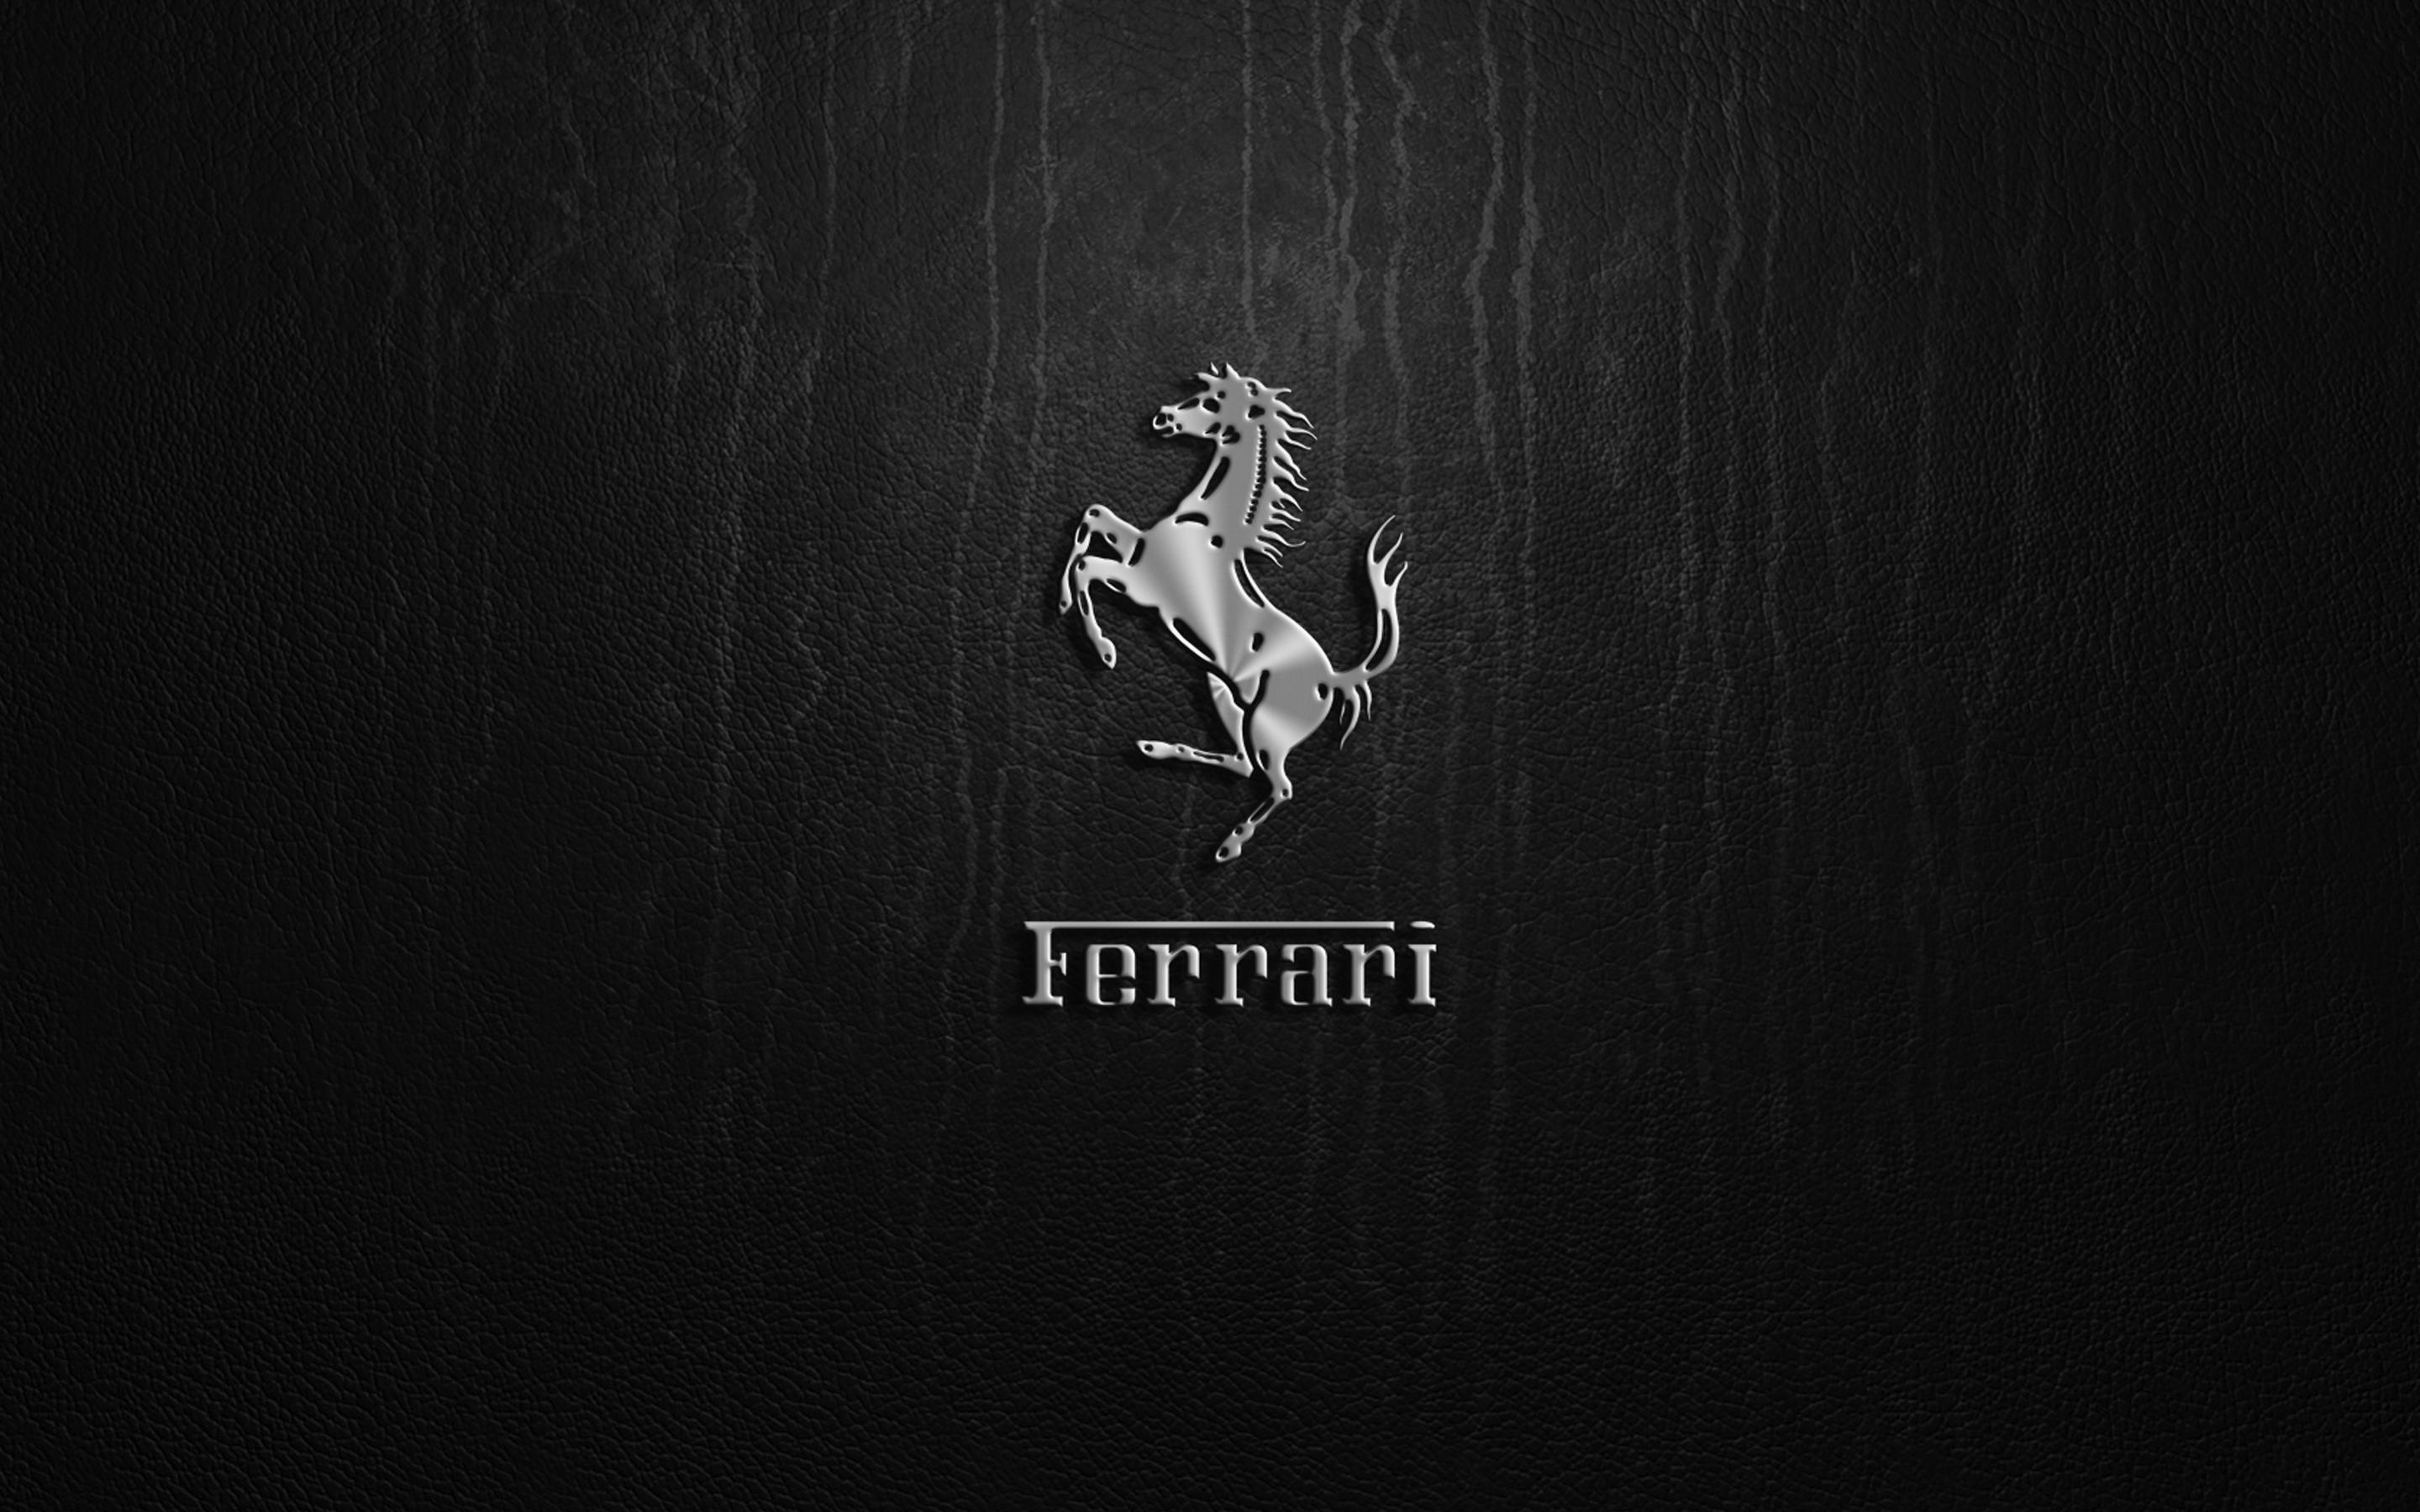 10 Latest Ferrari Logo Hd Wallpapers FULL HD 1080p For PC Background